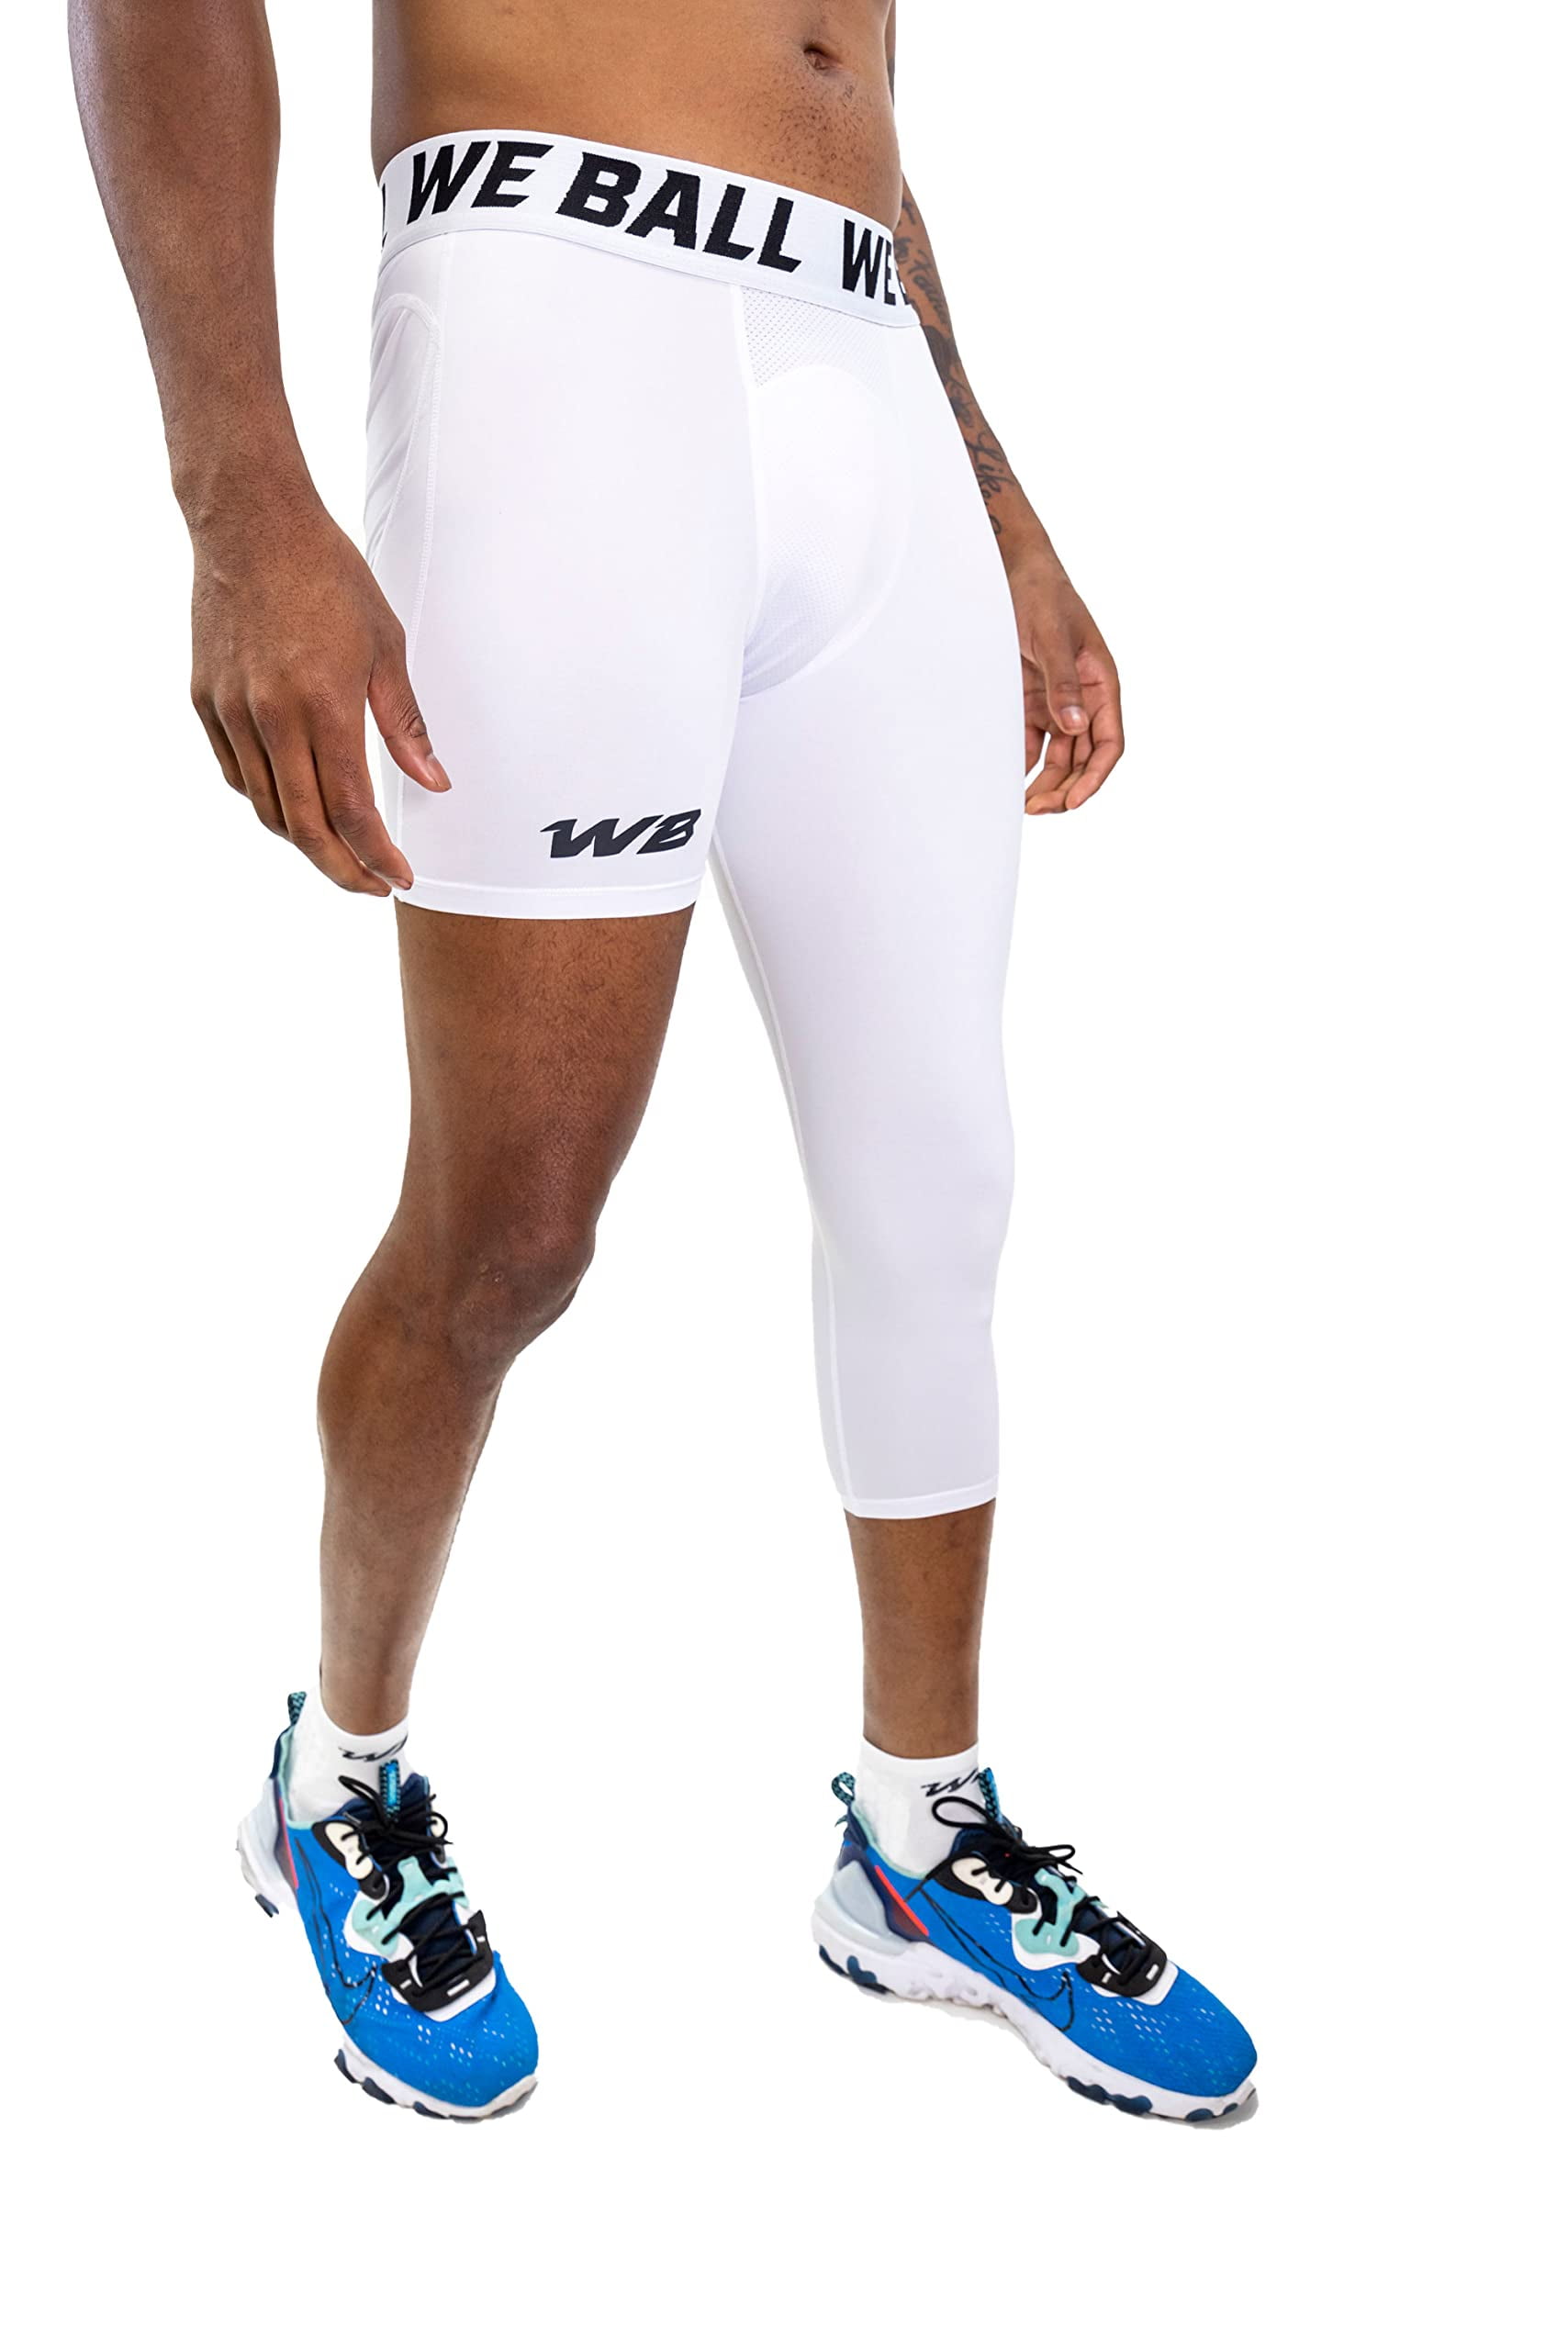 Klooyo Men's One Leg Compression Capri Tights Base Pants Layer Athletic Basketball J8j8 Other Xl